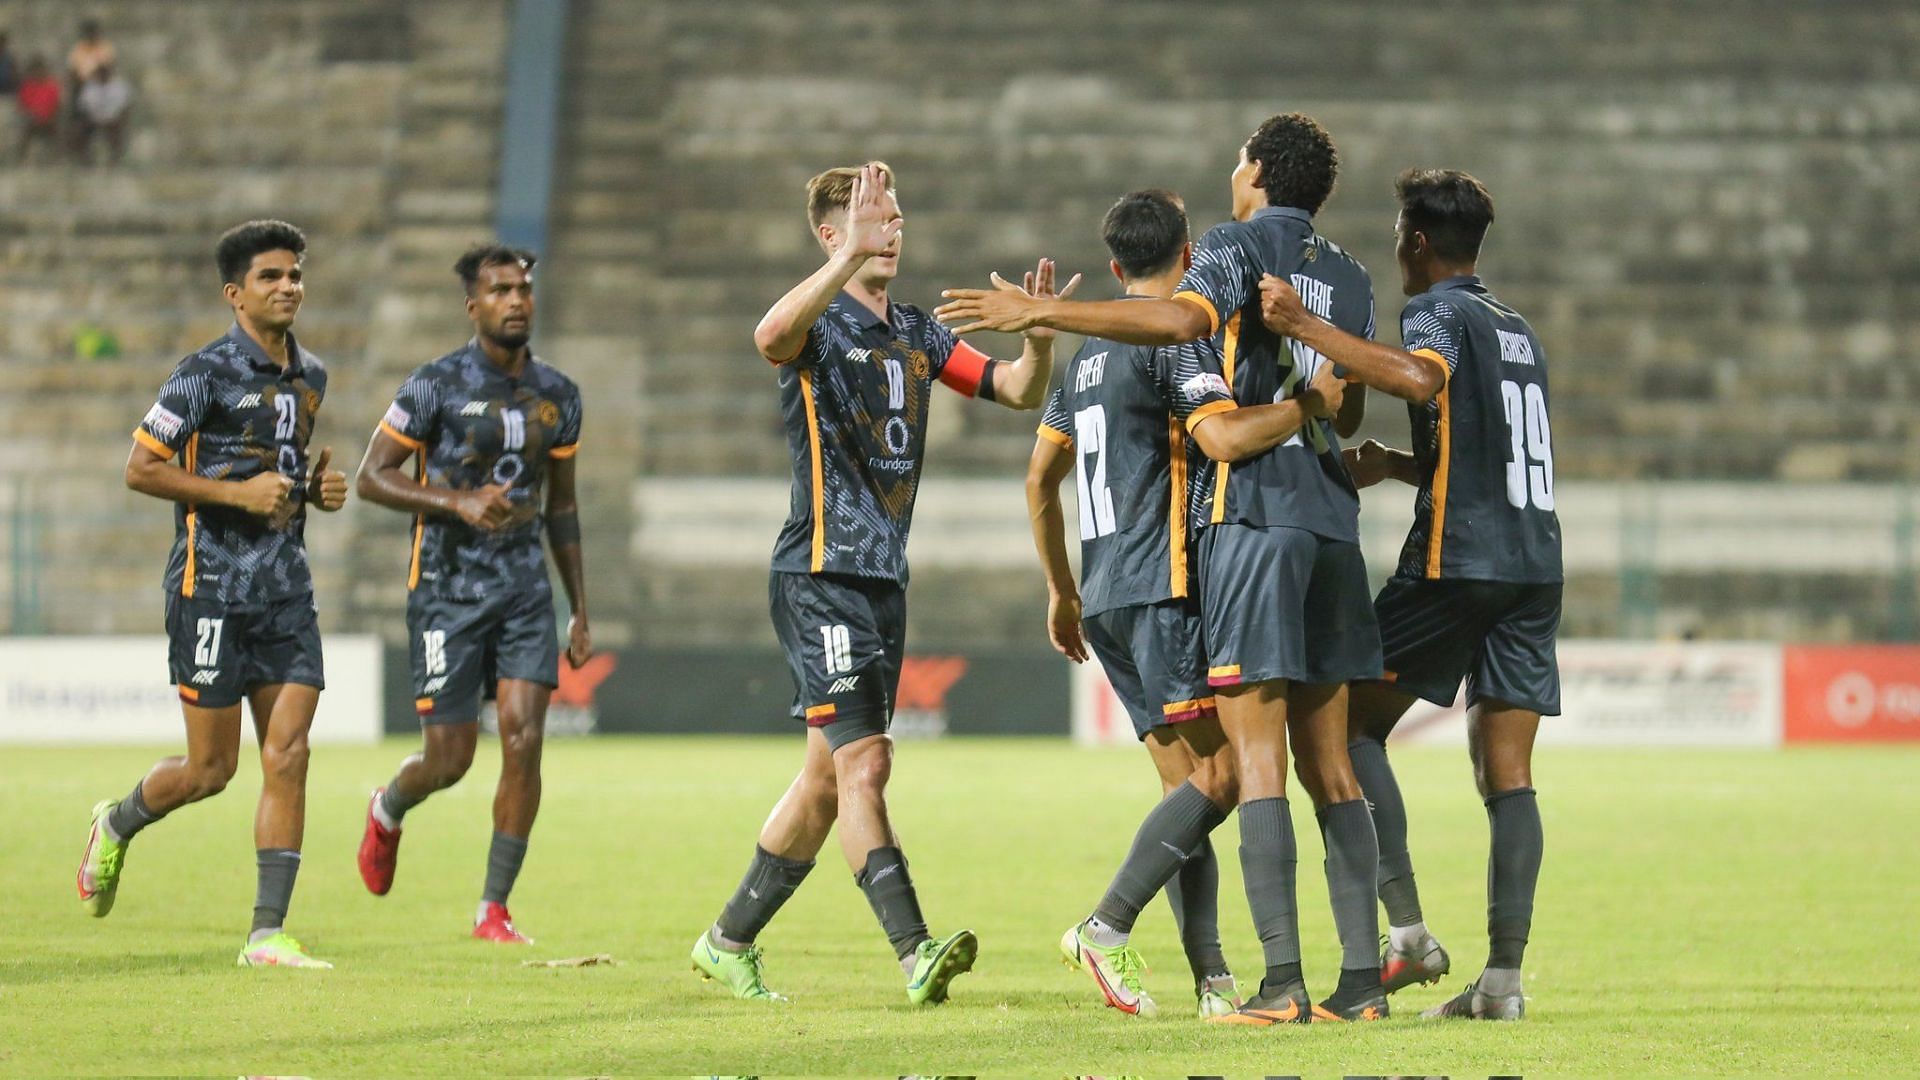 RoundGlass Punjab players celebrate after scoring a goal (Image Courtesy: RGPFC Twitter)